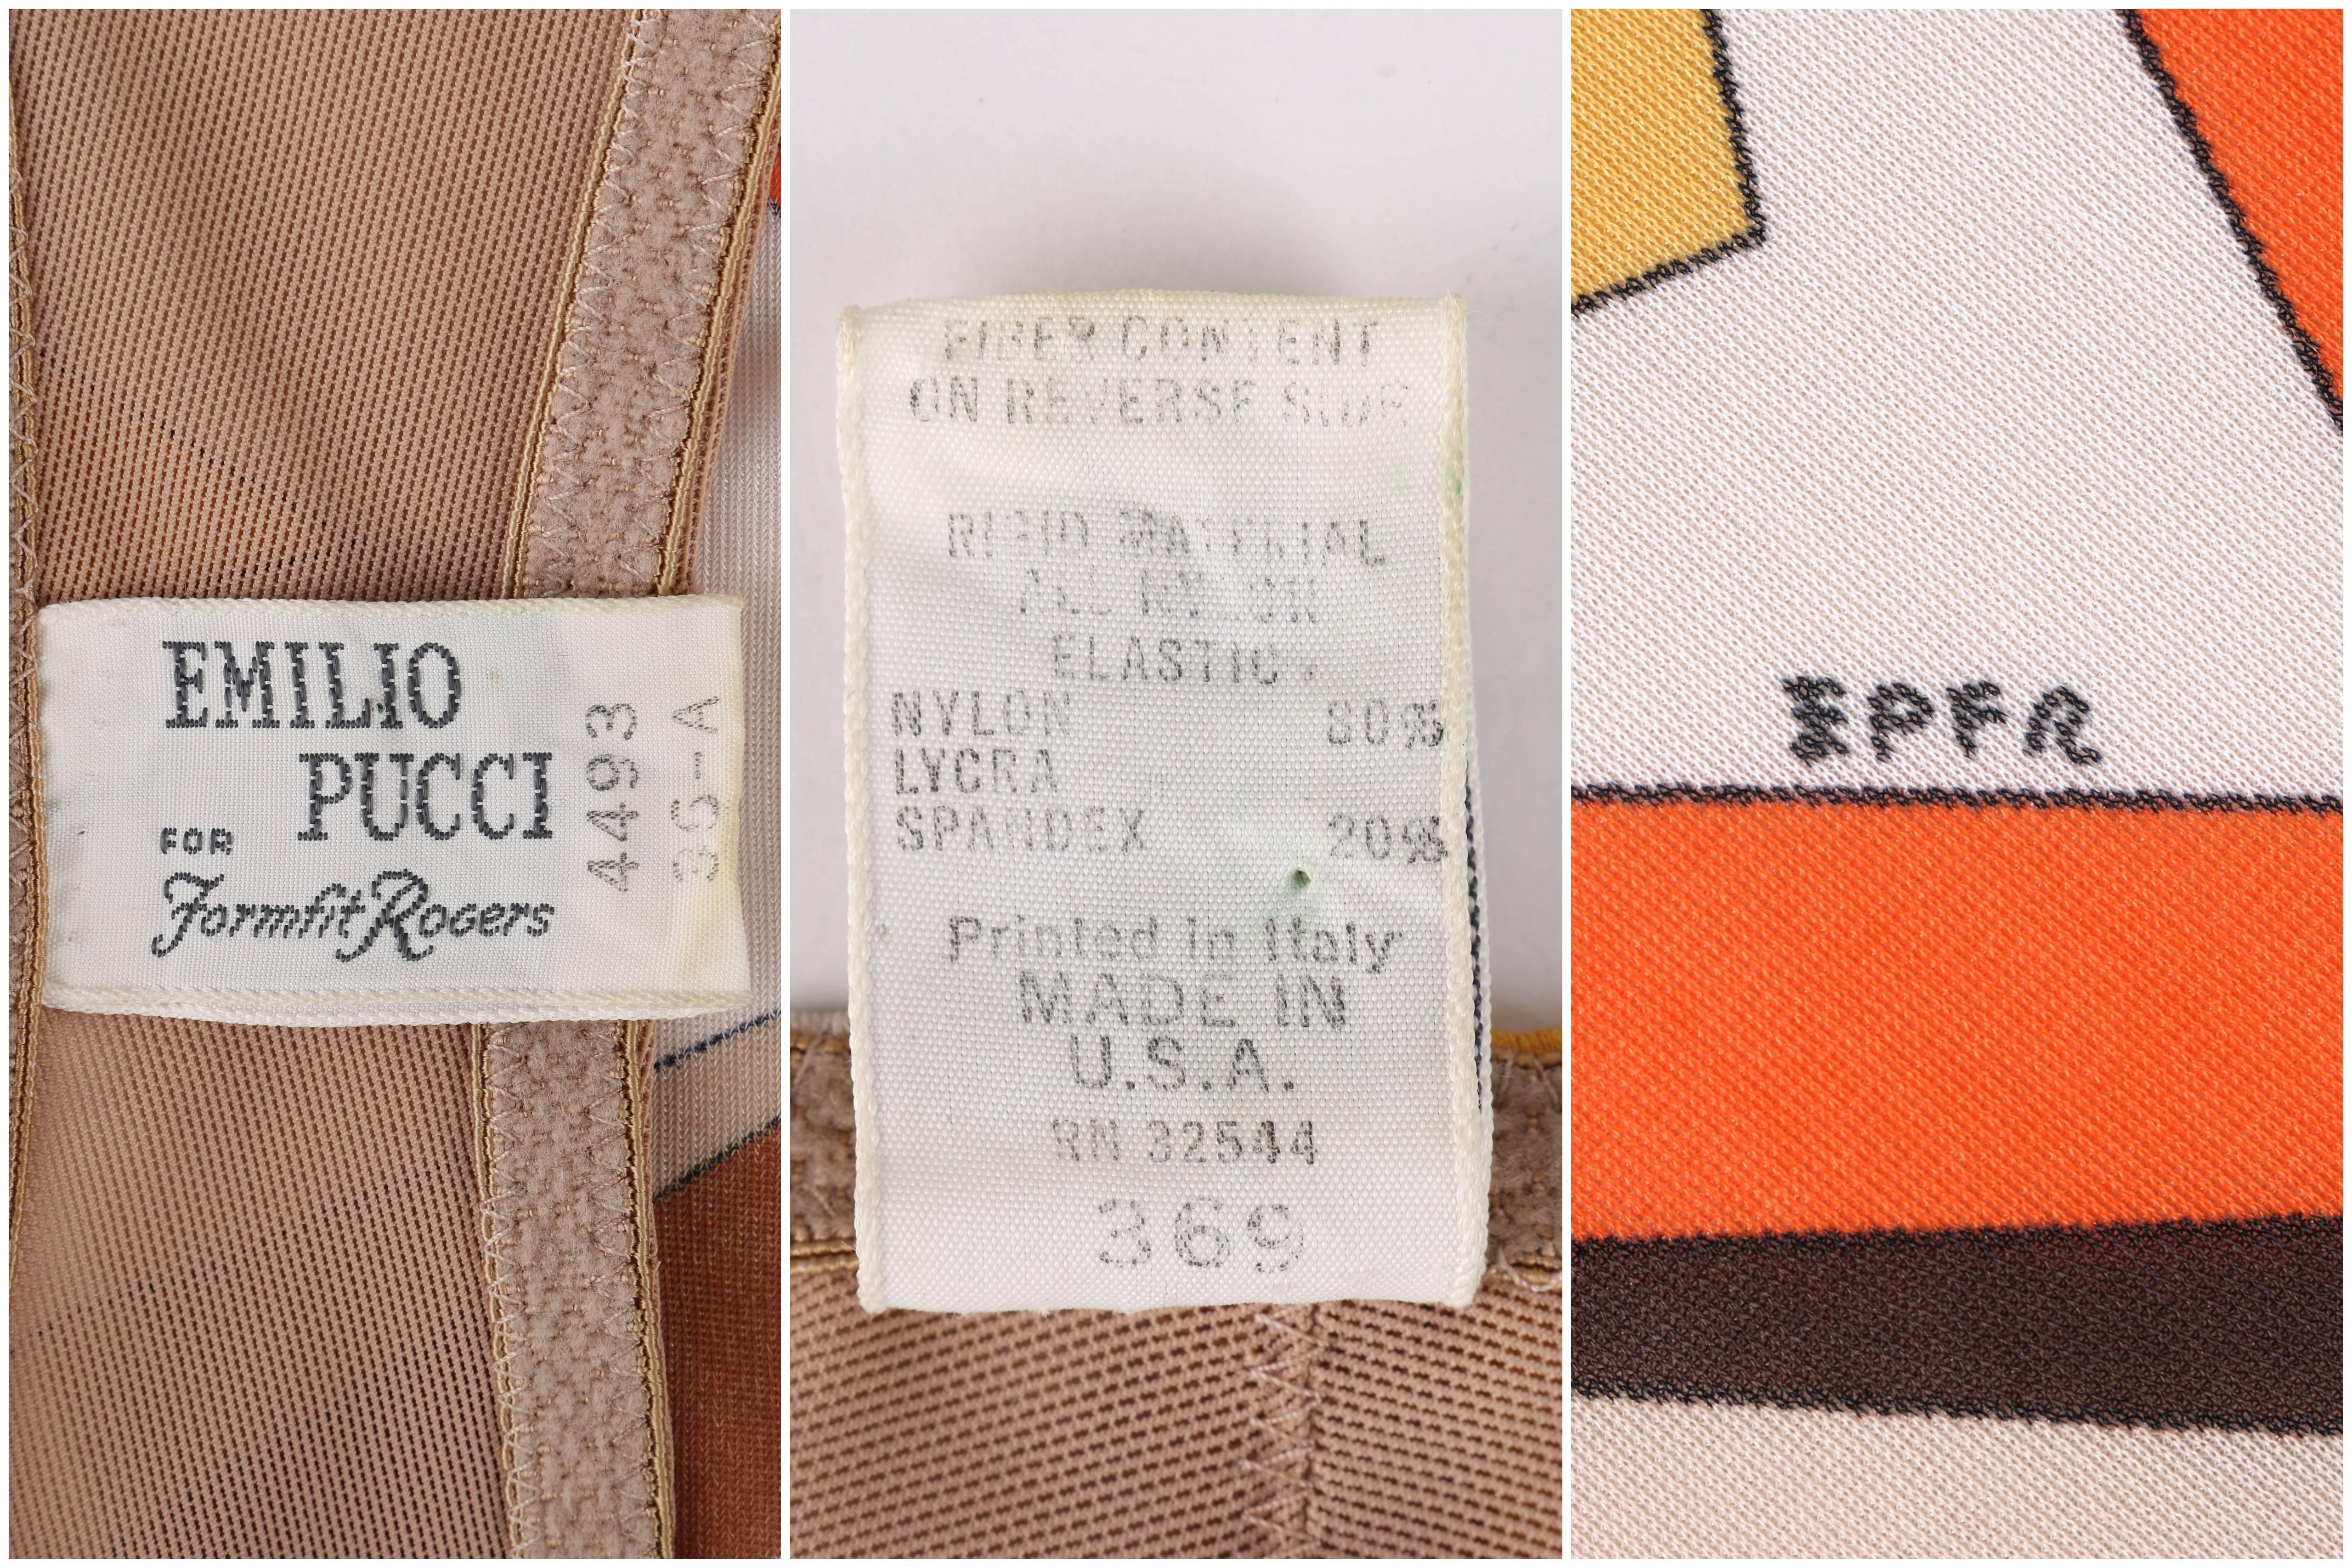 EMILIO PUCCI c.1960s Formfit Rogers 2pc Tan Geometric Print Tunic Dress Slip Set 3